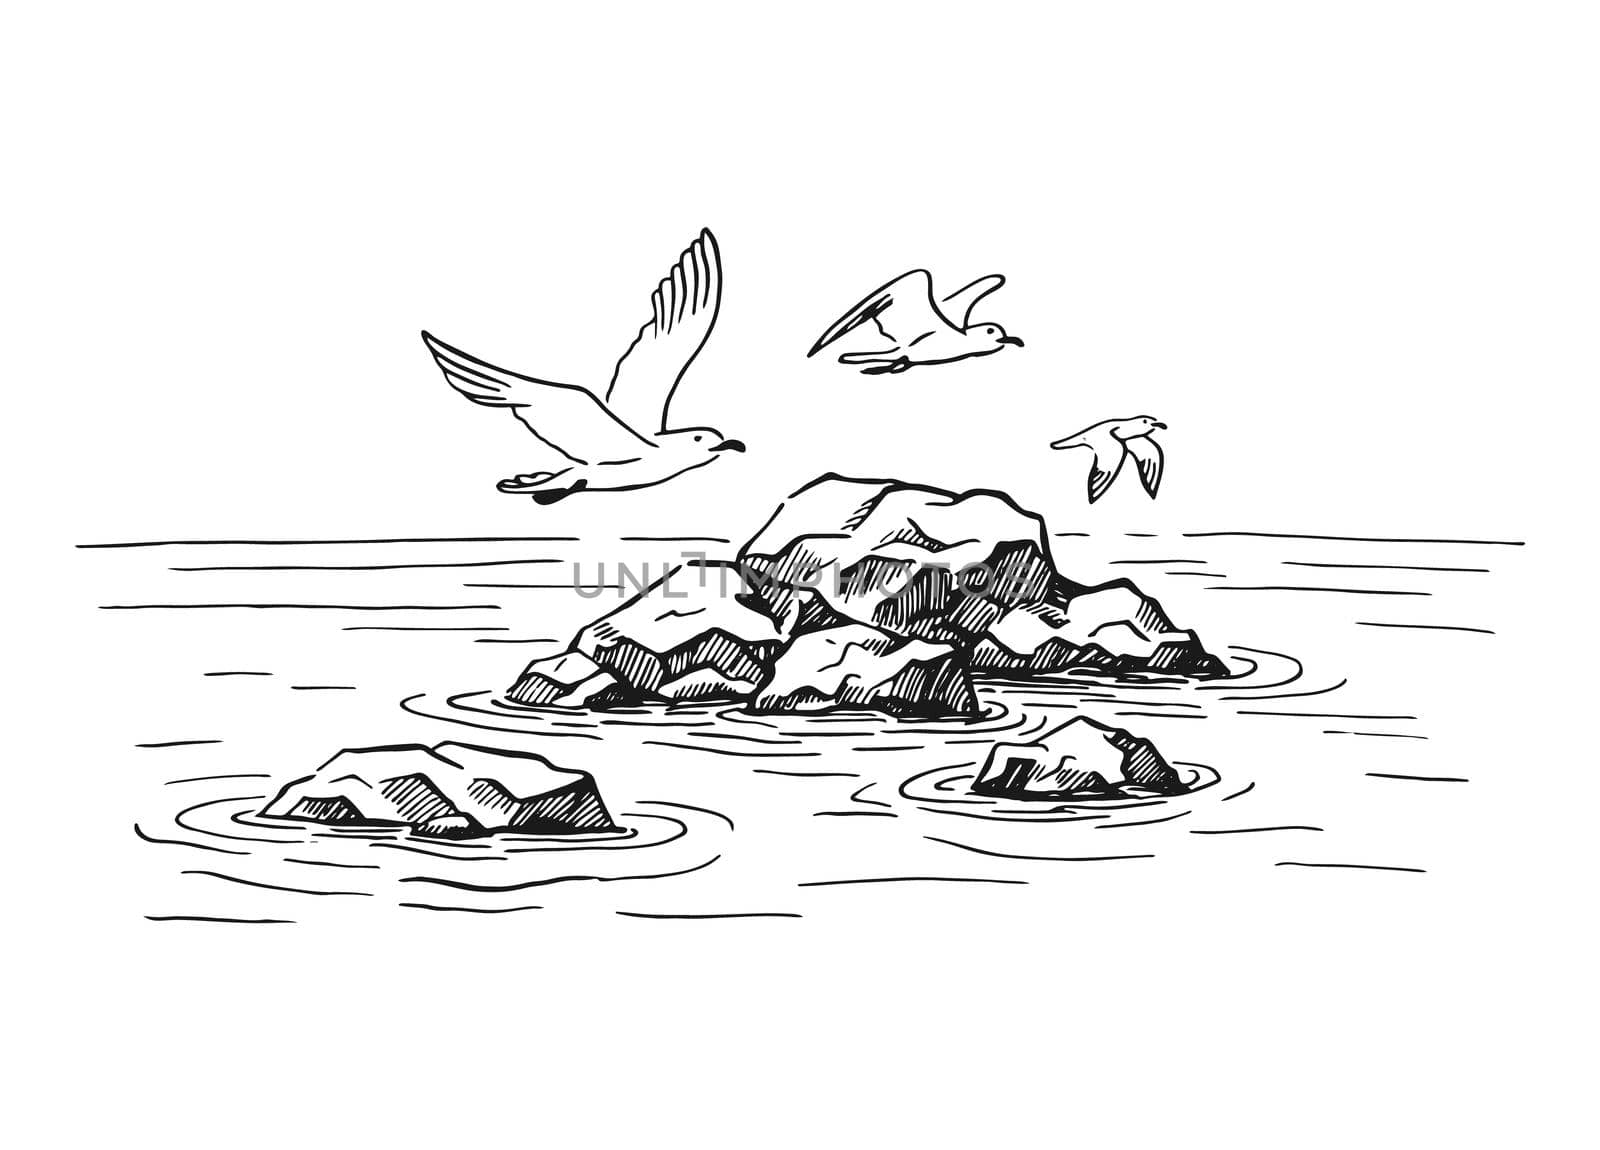 Landscape, sea, rocks, seagulls. Hand drawn illustration